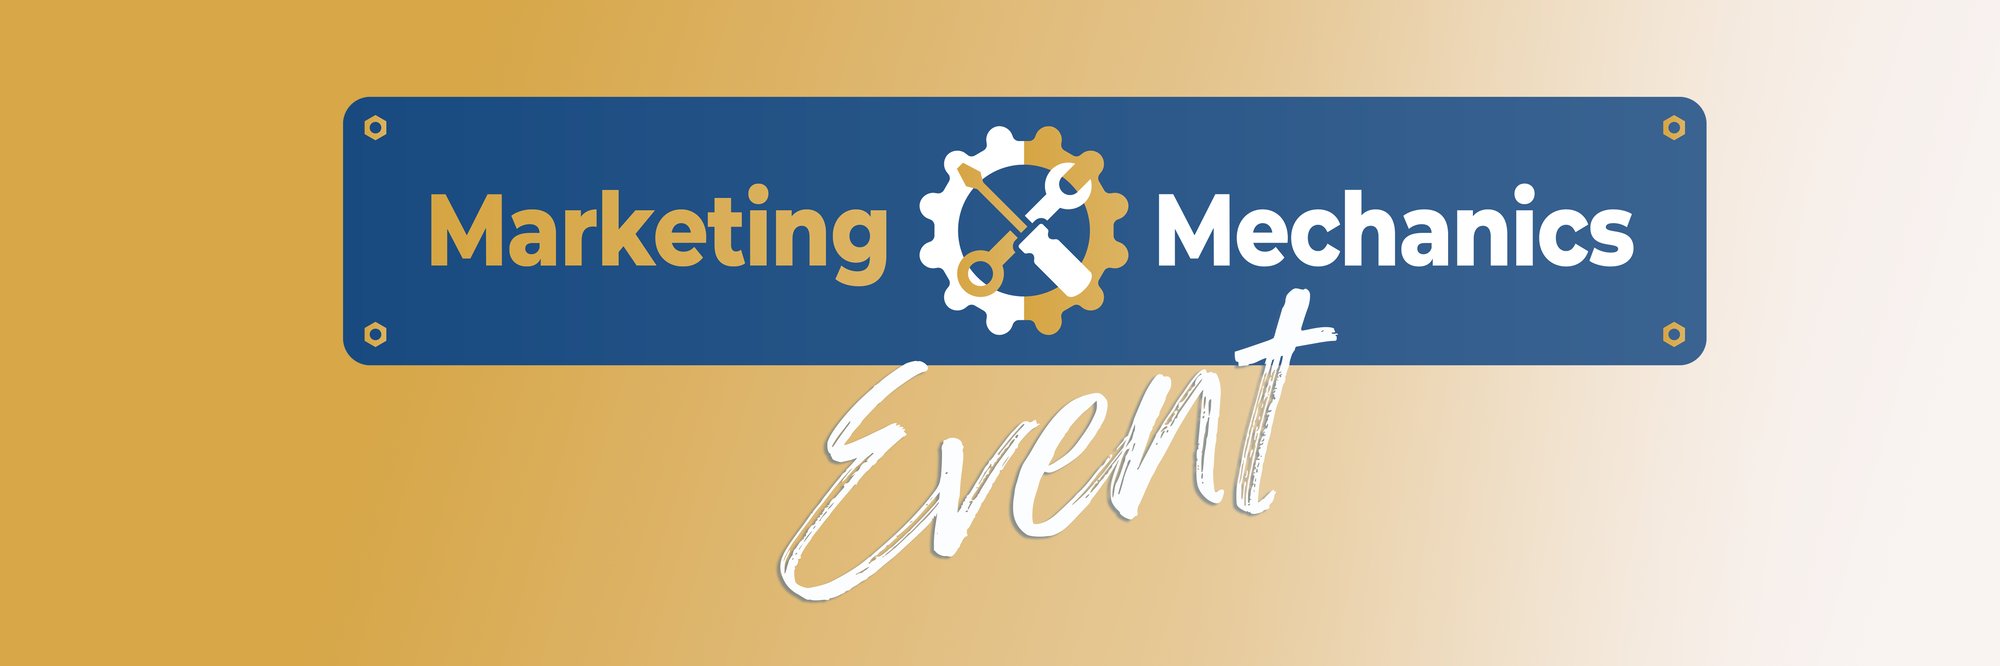 Marketing Mechanics Event Bannerhead2